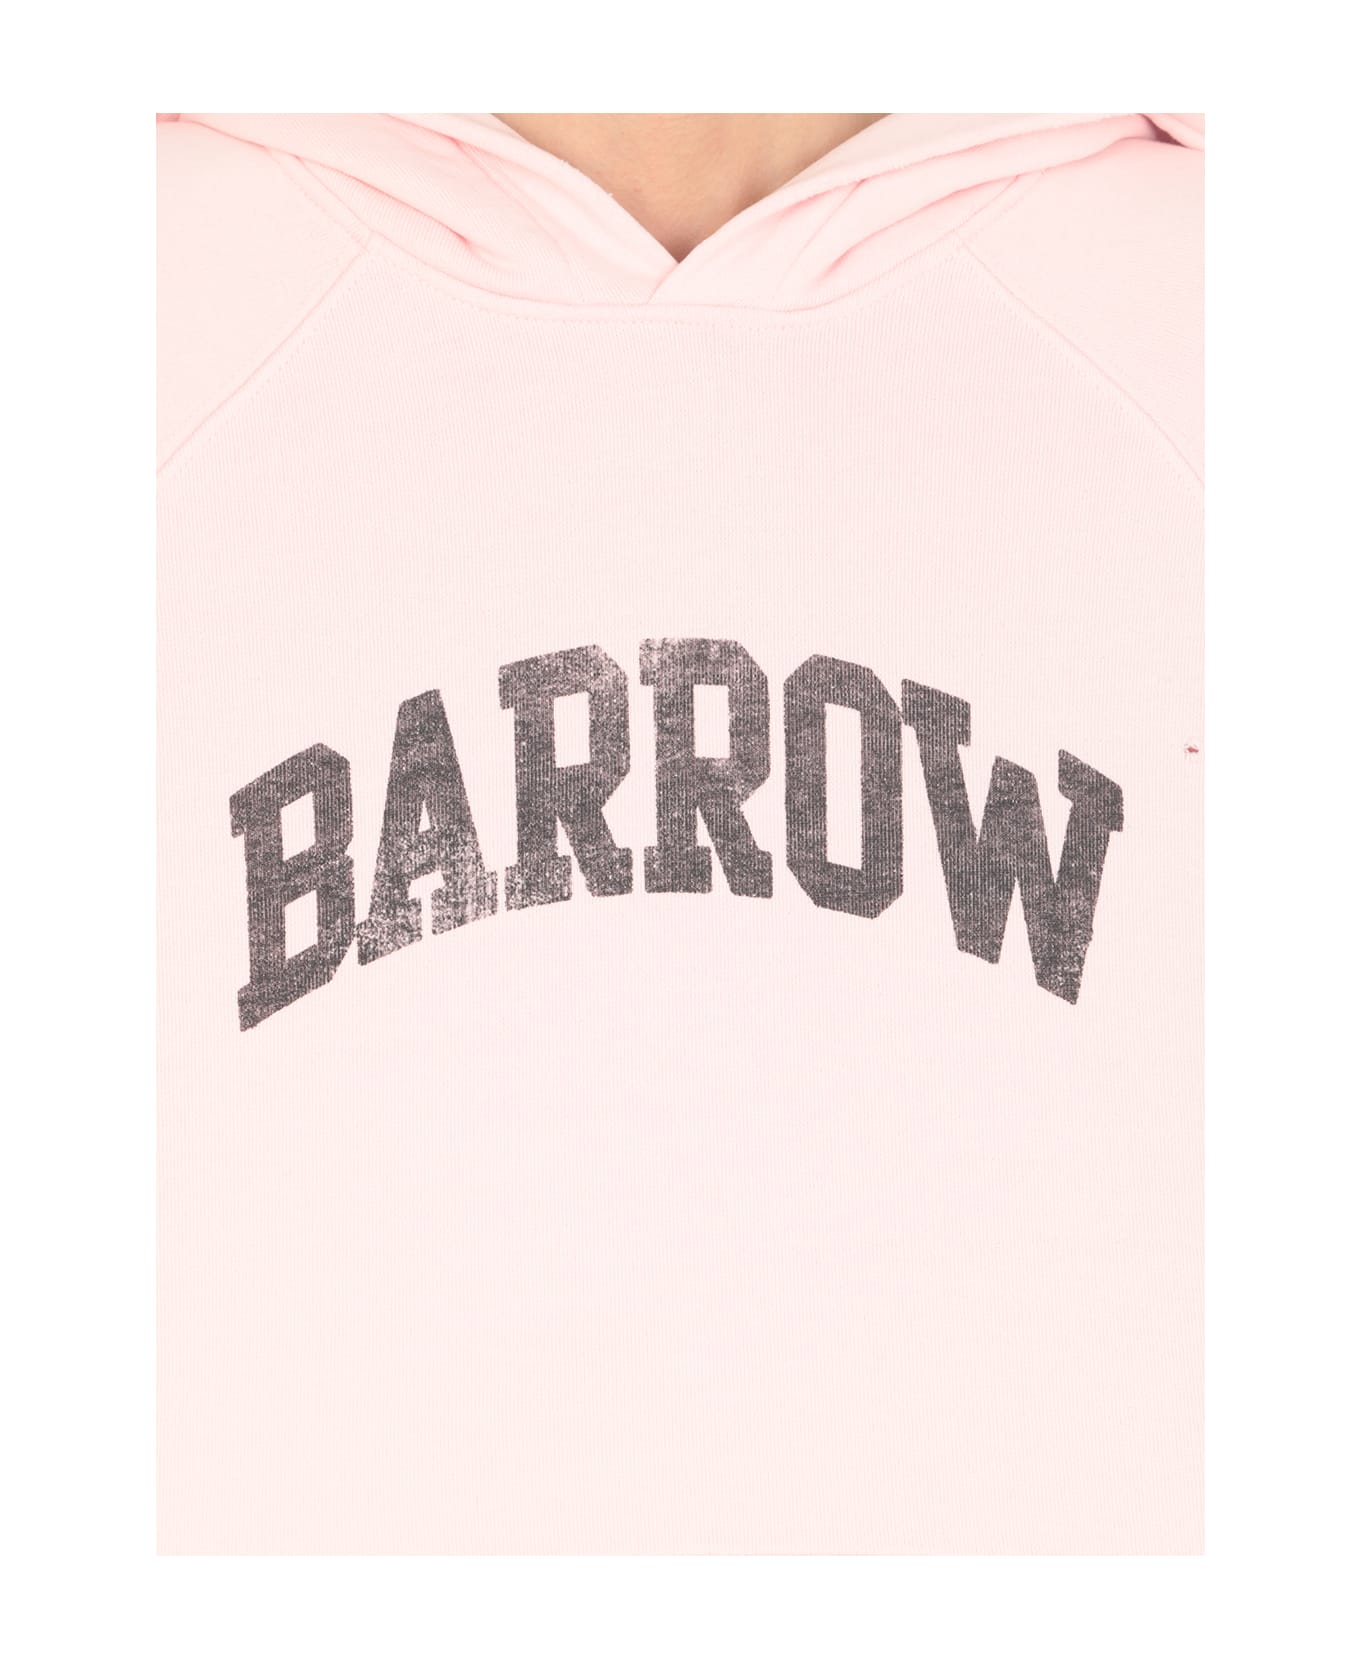 Barrow Logoed Sweater - Pink